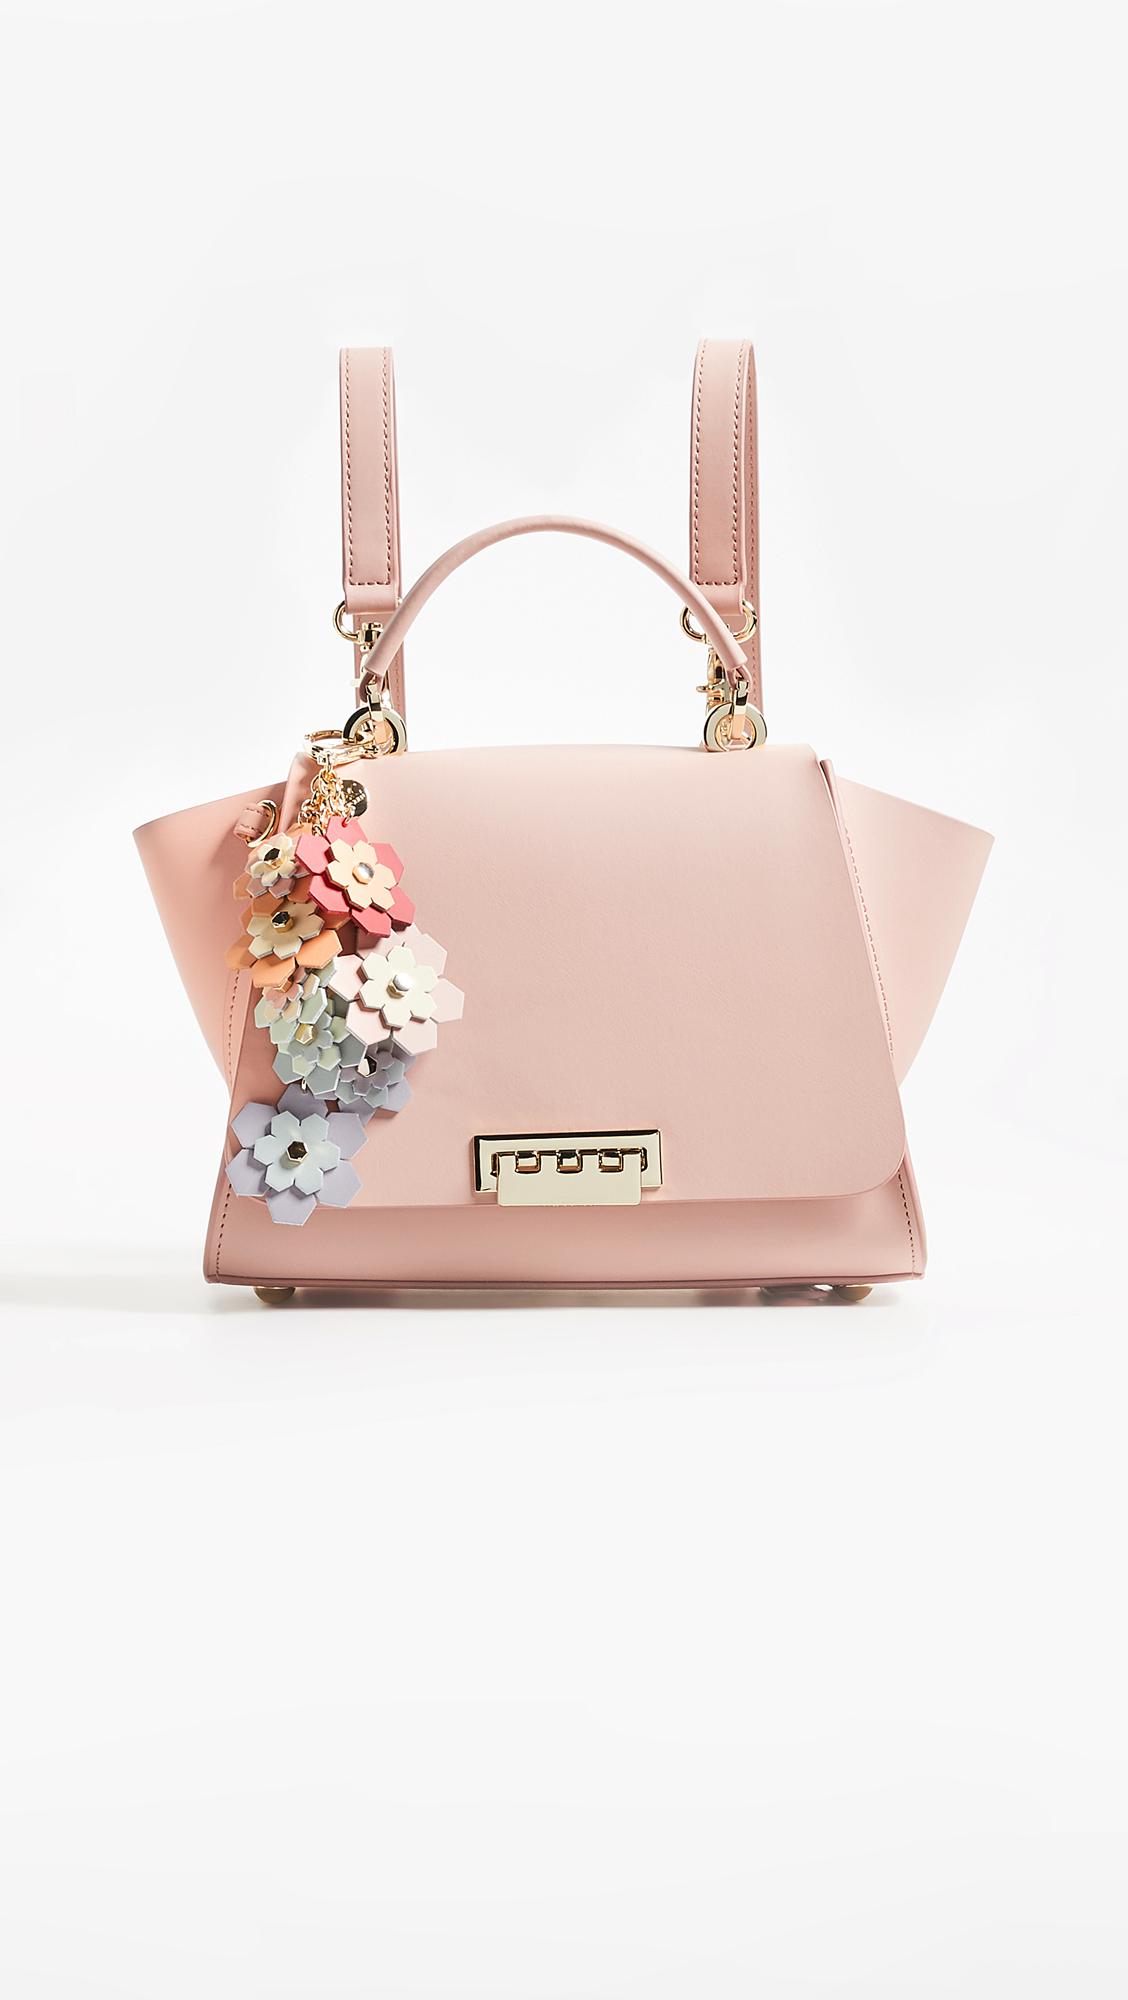 Zac Posen Pink Handbags